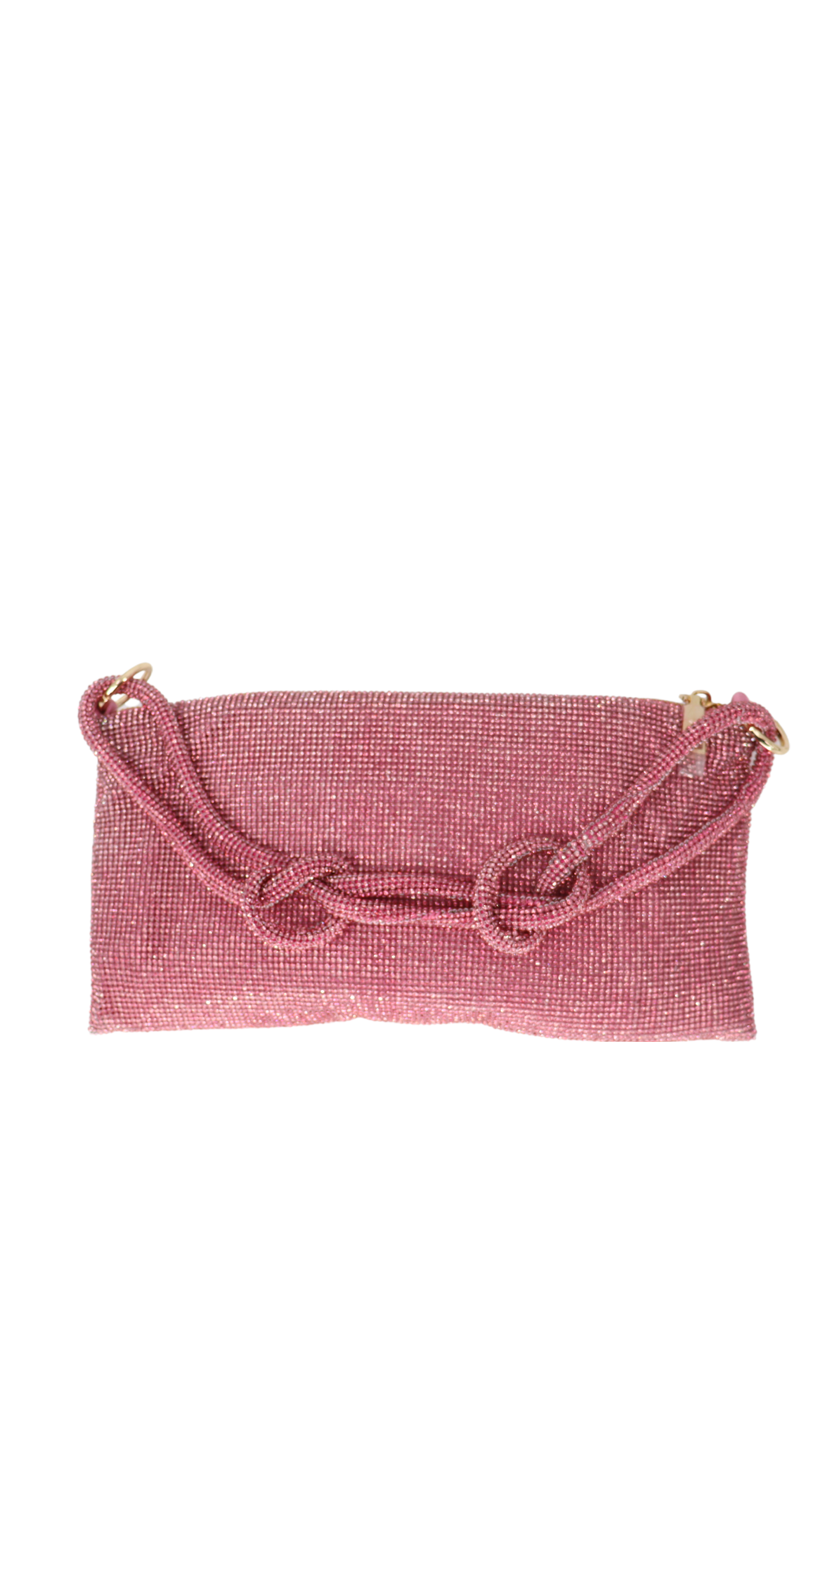 LILIANA UH-Envy Pink Bag